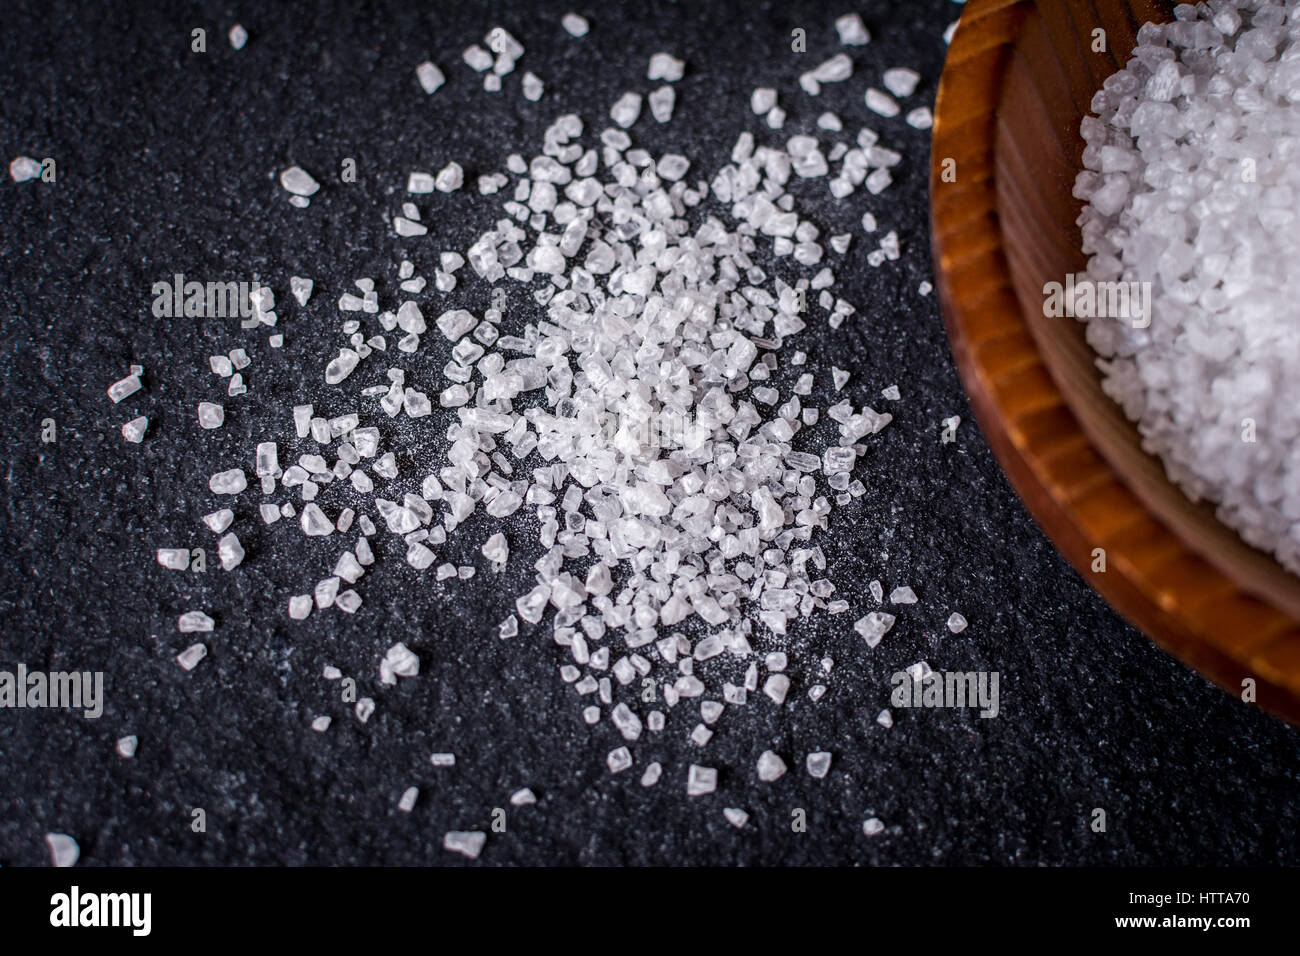 grain of salt